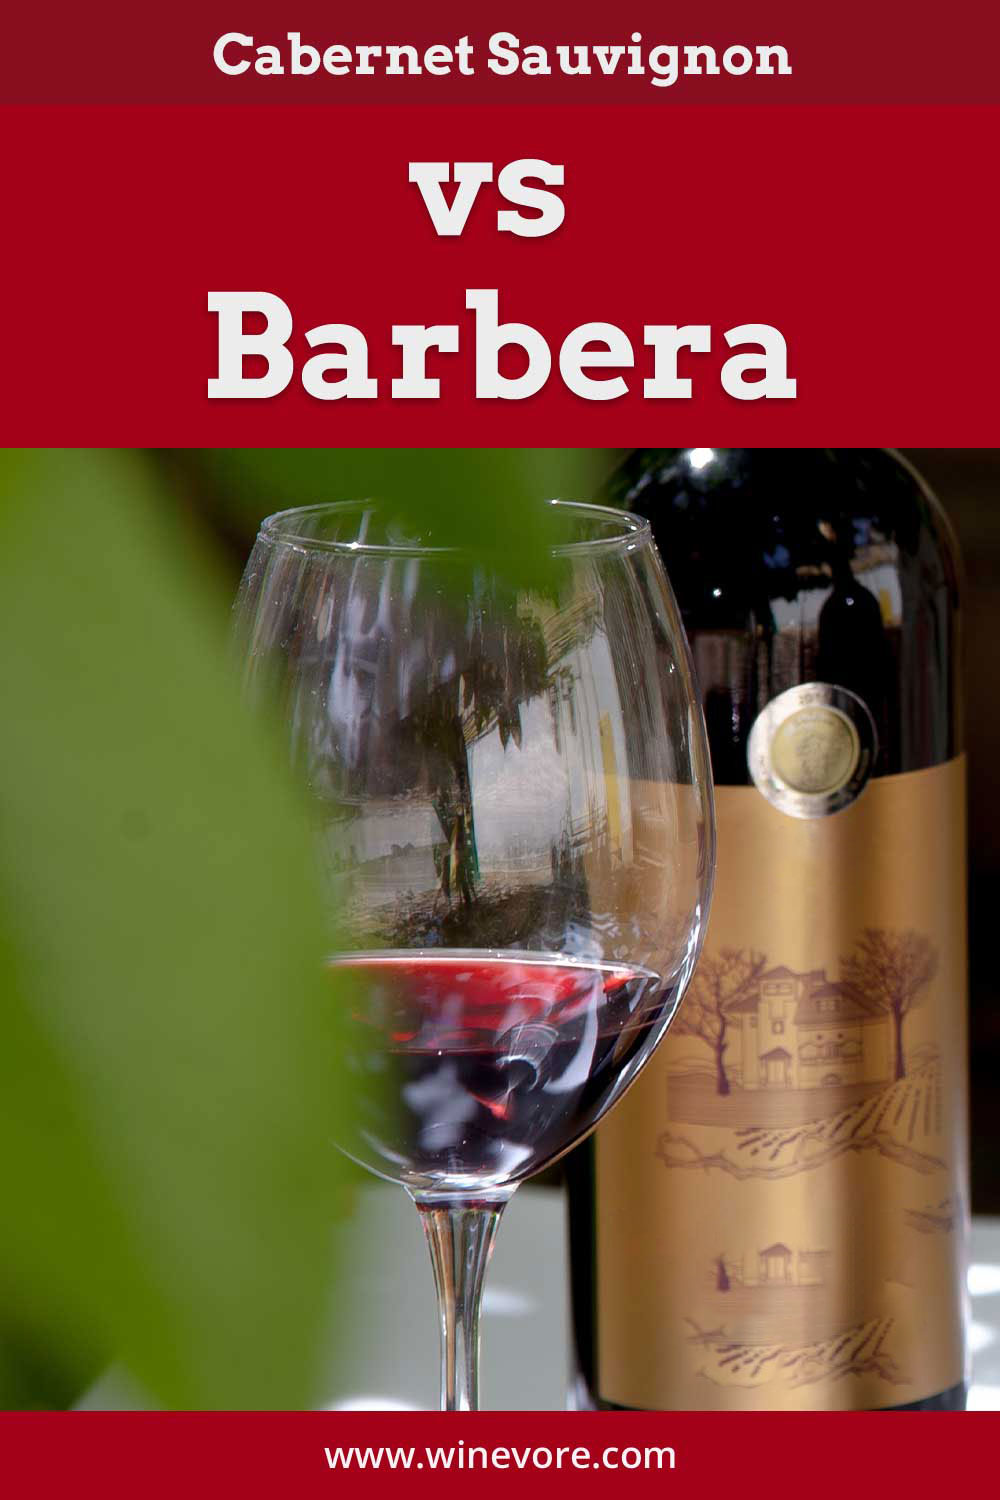 A wine glass with red wine in it near a bottle - Cabernet Sauvignon vs Barbera.